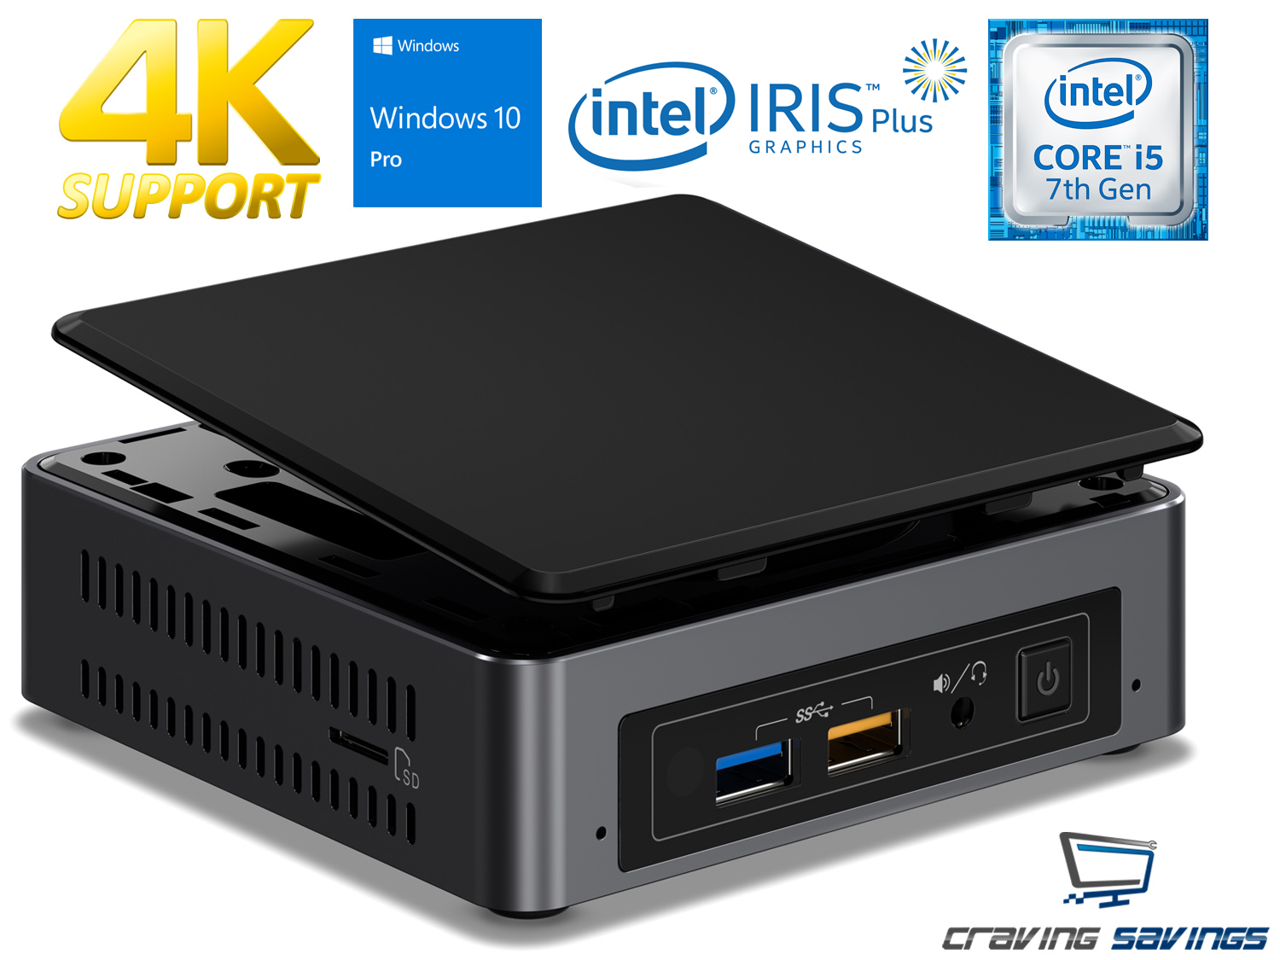 Intel NUC7i5BNK Mini PC, Intel Core i5-7260U 2.2GHz, 16GB DDR4, 256GB SSD, Wifi, BT 4.2, HDMI, Thunderbolt 3, 4k Support, Dual Monitor Capable, Windows 10 Pro